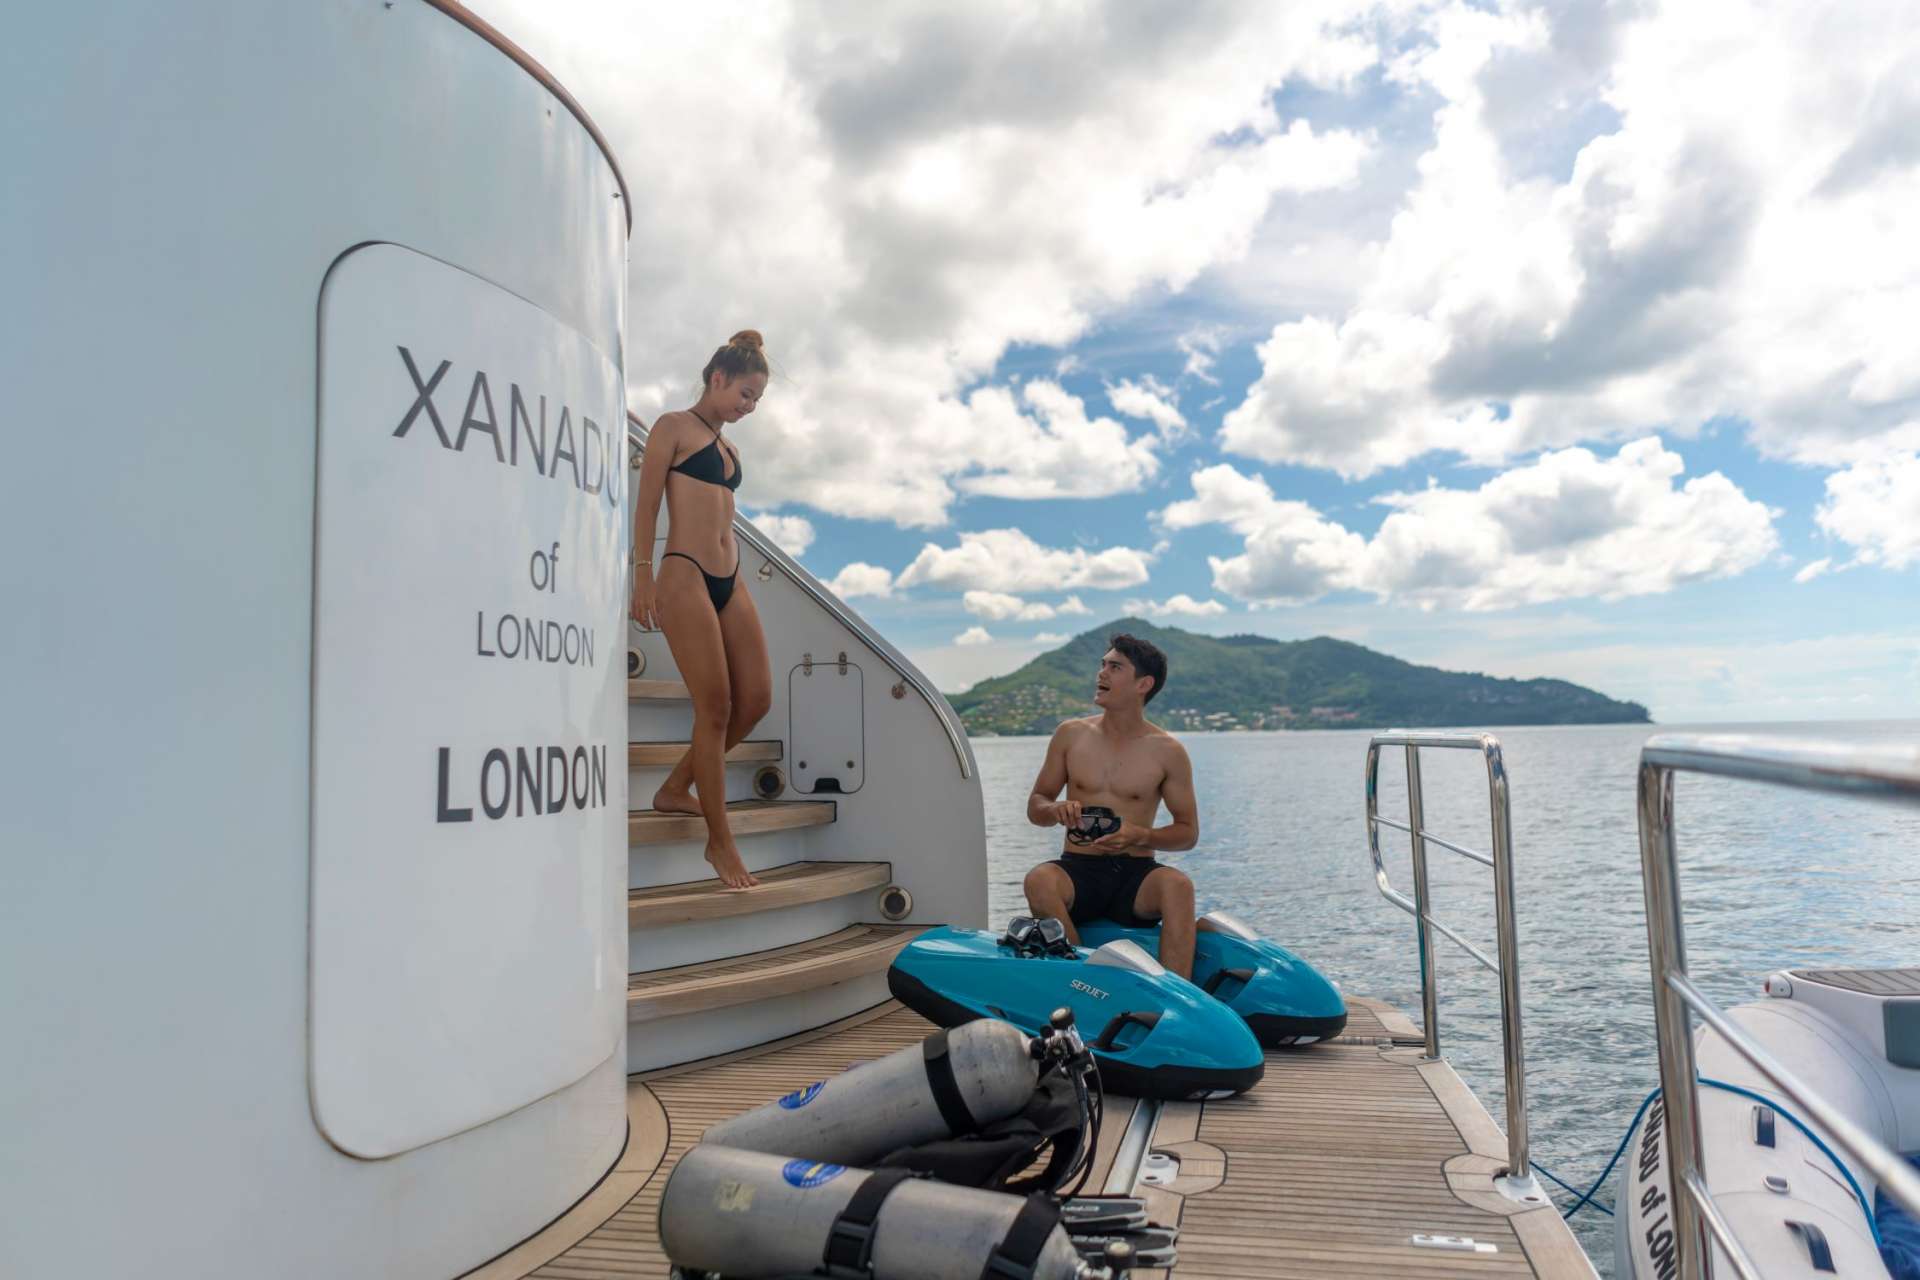 xanadu of london - Yacht Charter El Nido & Boat hire in SE Asia 5